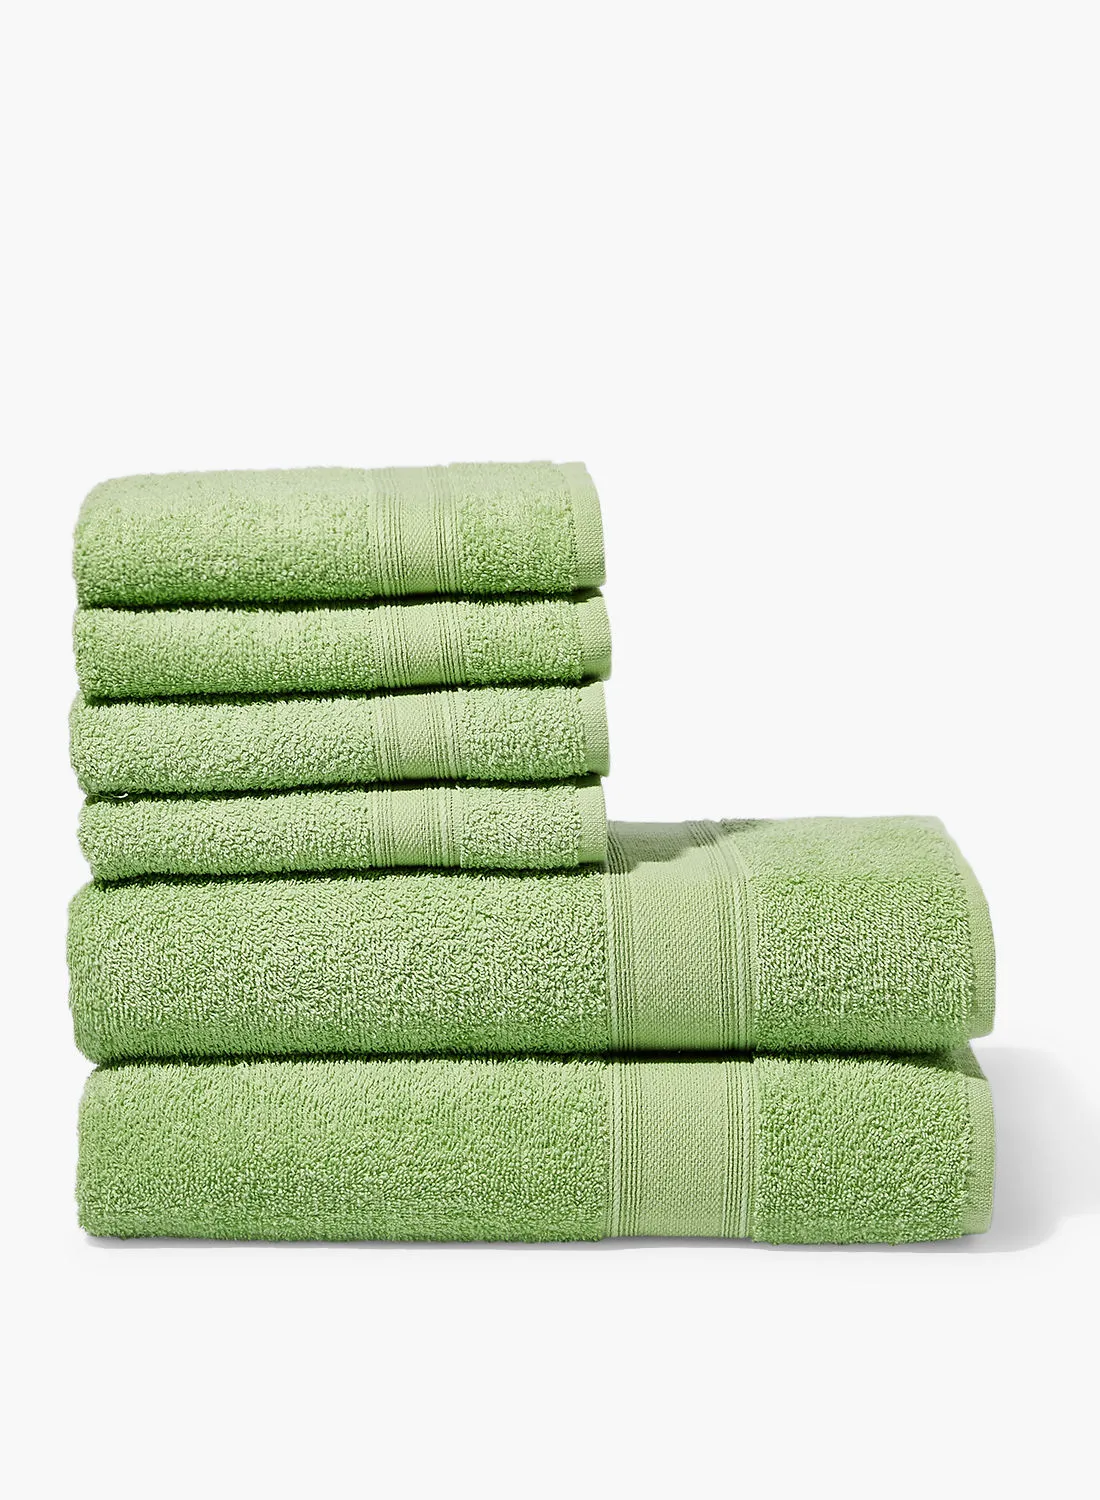 Amal 6 Piece Bathroom Towel Set - 400 GSM 100% Cotton Terry - 2 Hand Towel - 4 Bath Towel - Green_Apple Color -Quick Dry - Super Absorbent